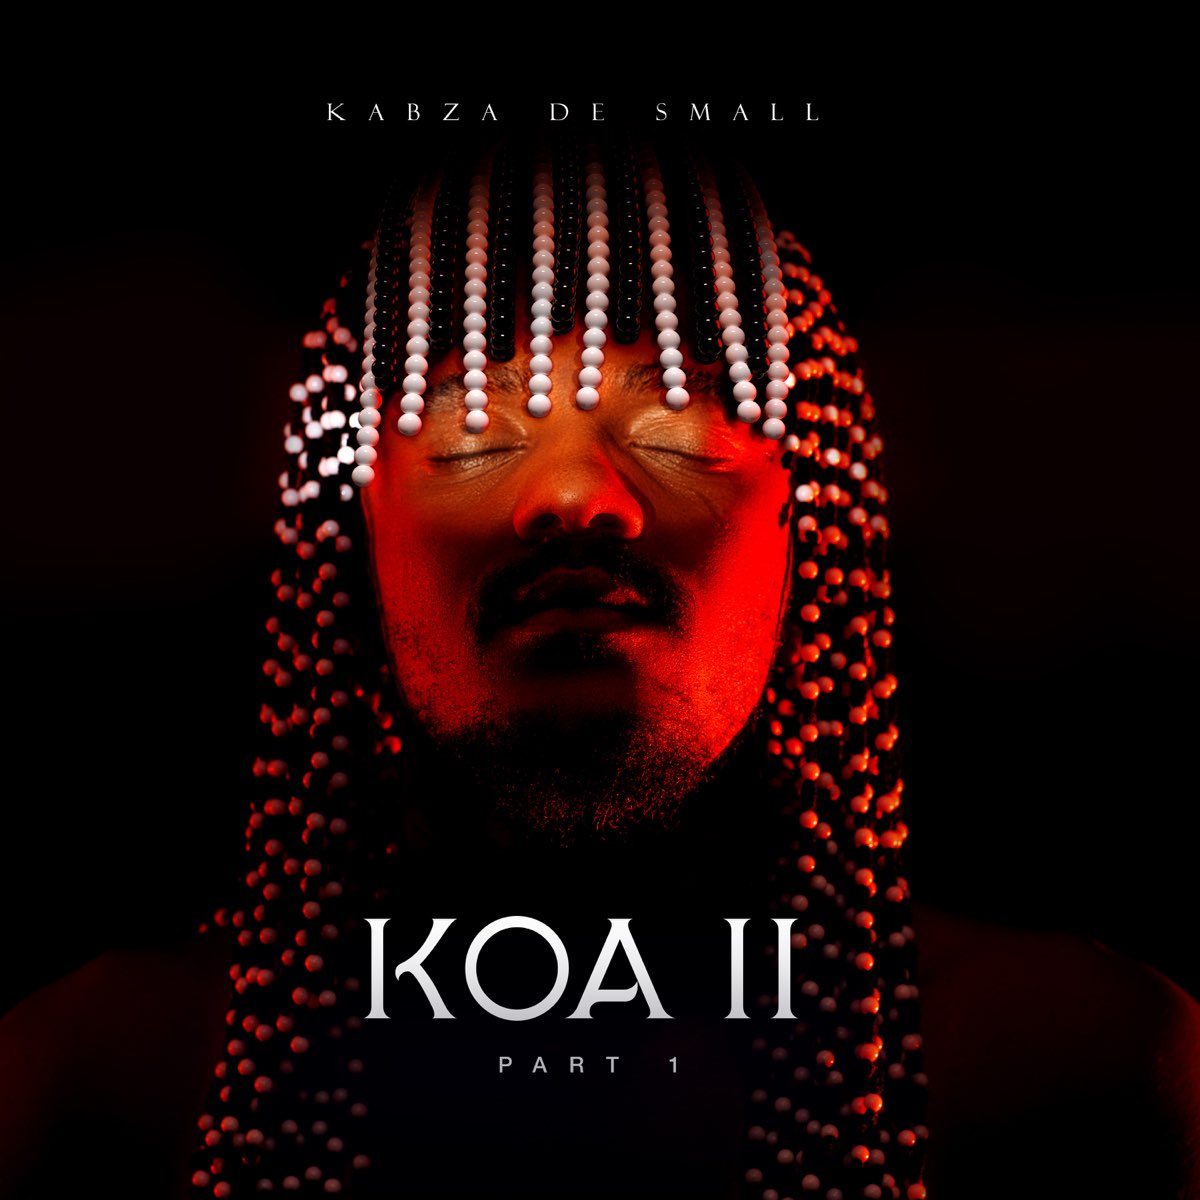 ‎KOA II Part 1 by Kabza De Small on Apple Music